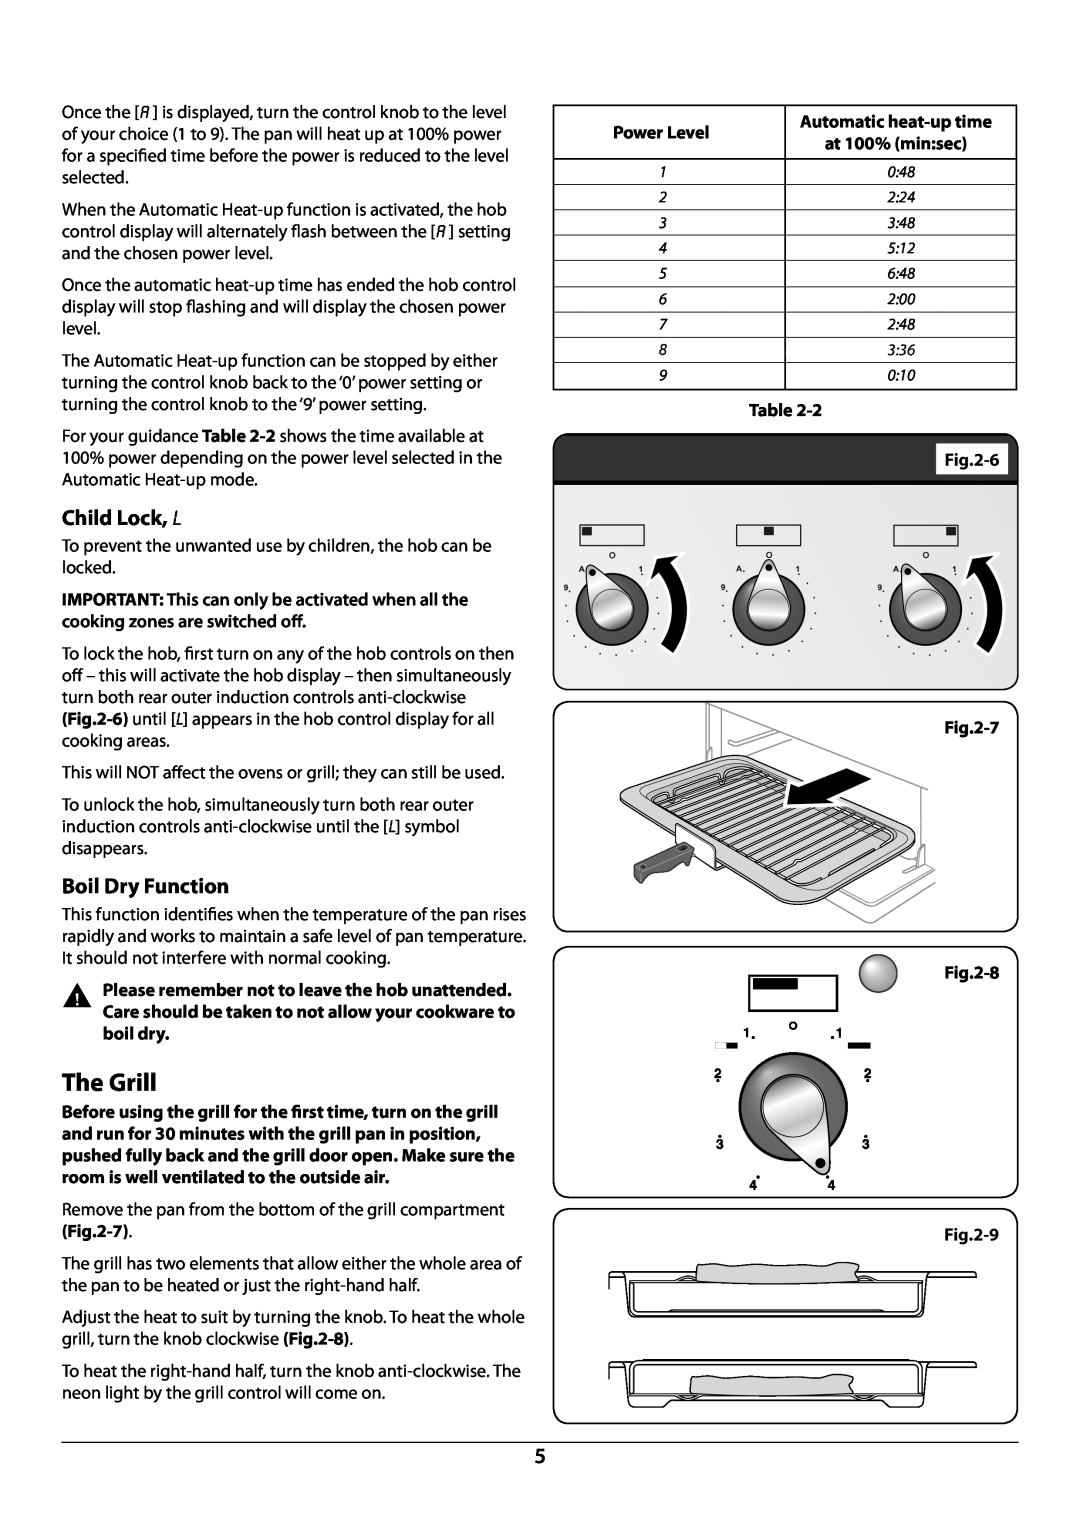 Rangemaster U109952 - 02 manual The Grill, Child Lock, L, Boil Dry Function, 7, ArtNo.240-0001 Toledo grill control 